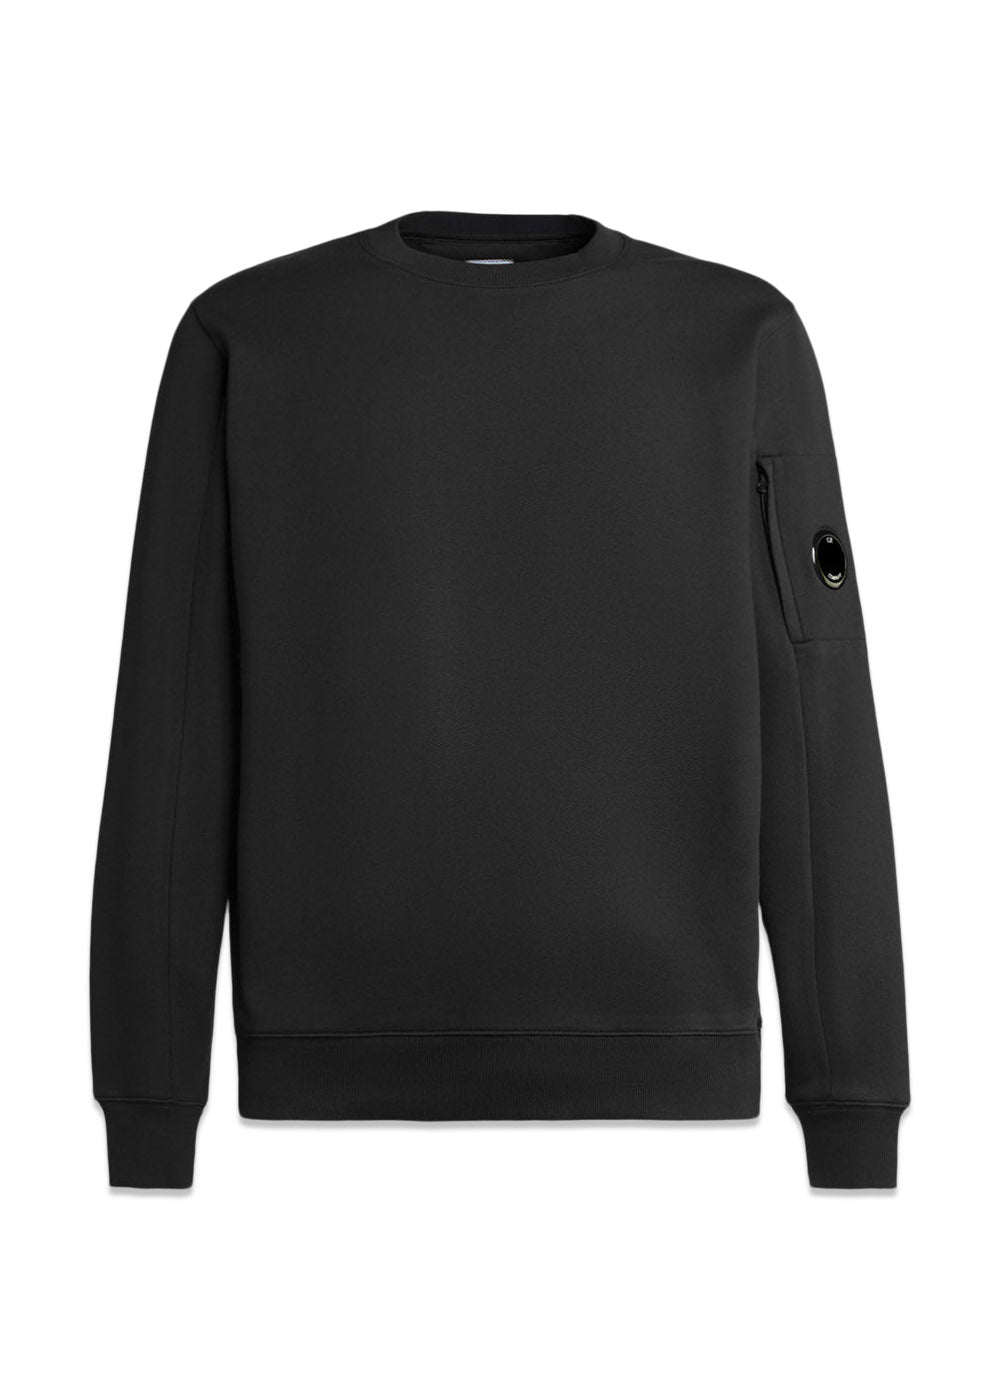 sweatshirts crew neck black - Black